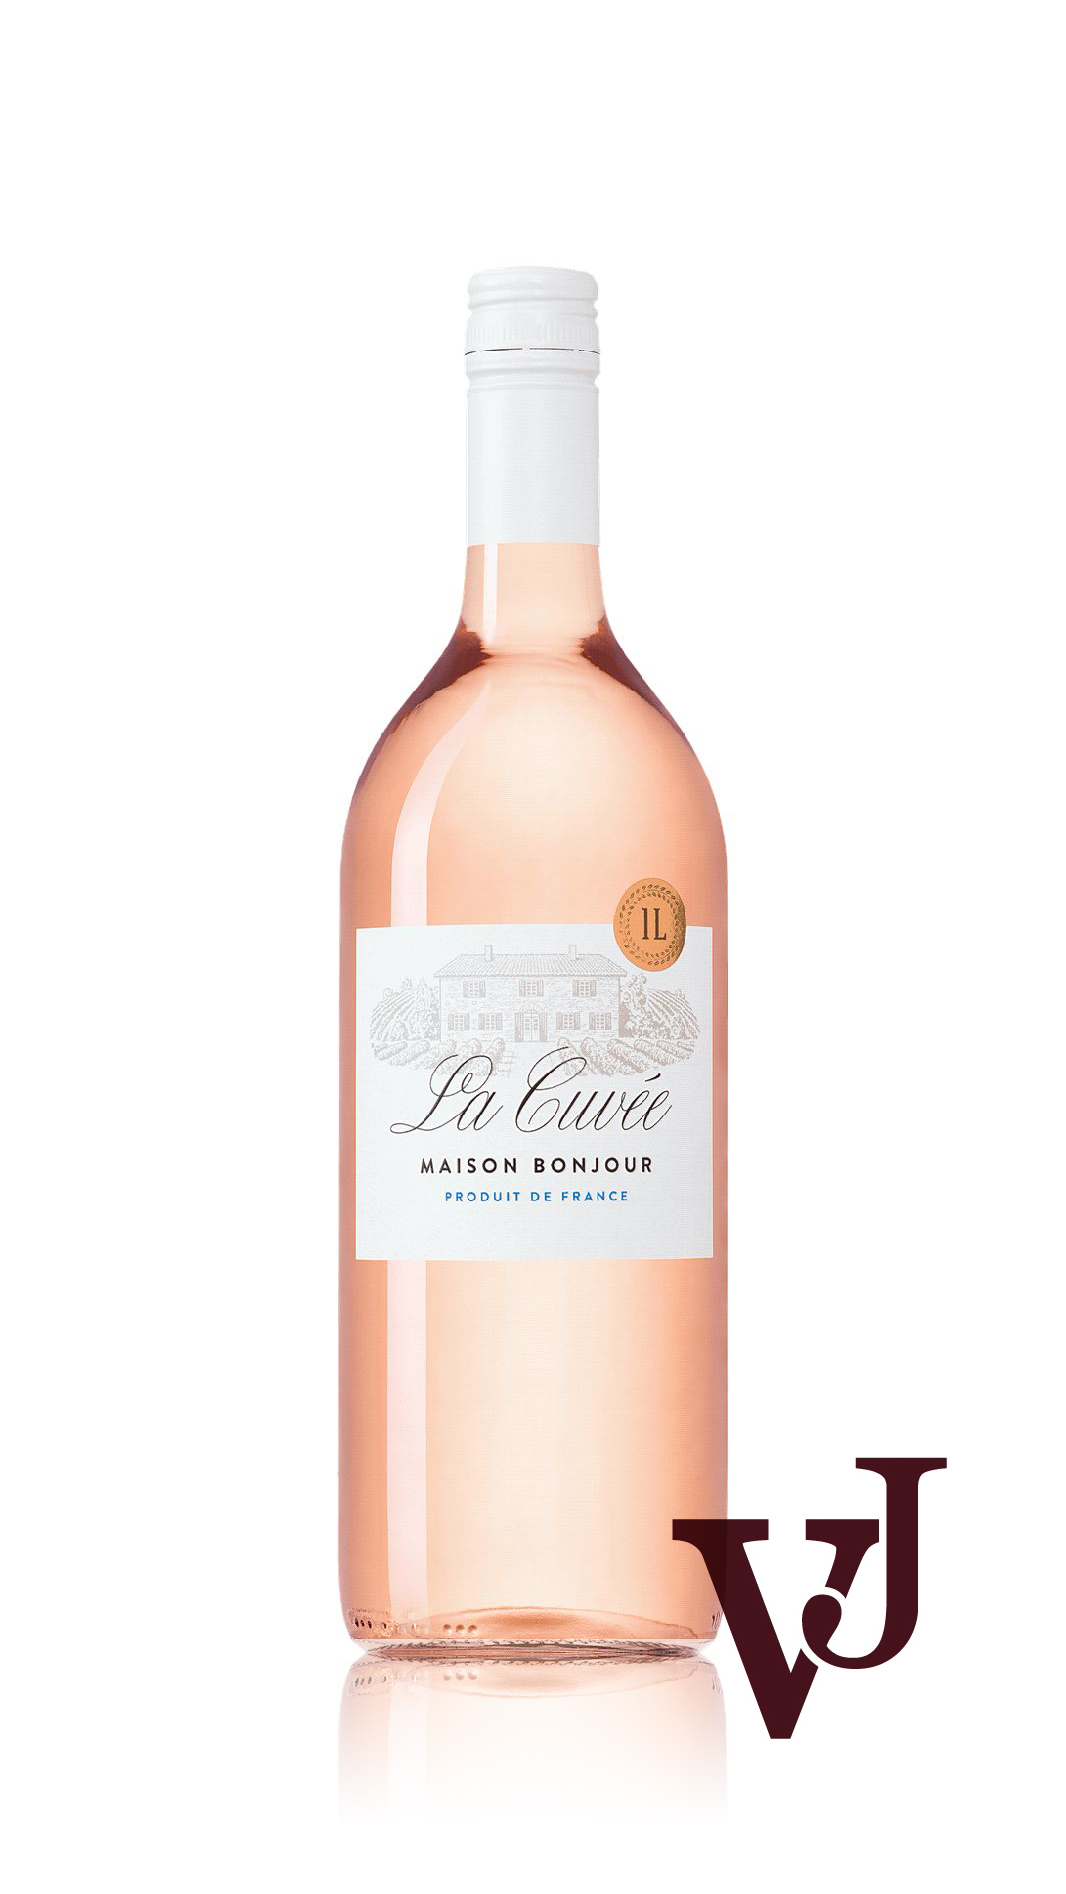 Rosé Vin - La Cuvée Maison Bonjour Rosé artikel nummer 7397801 från producenten Vins Biecher från området Frankrike.